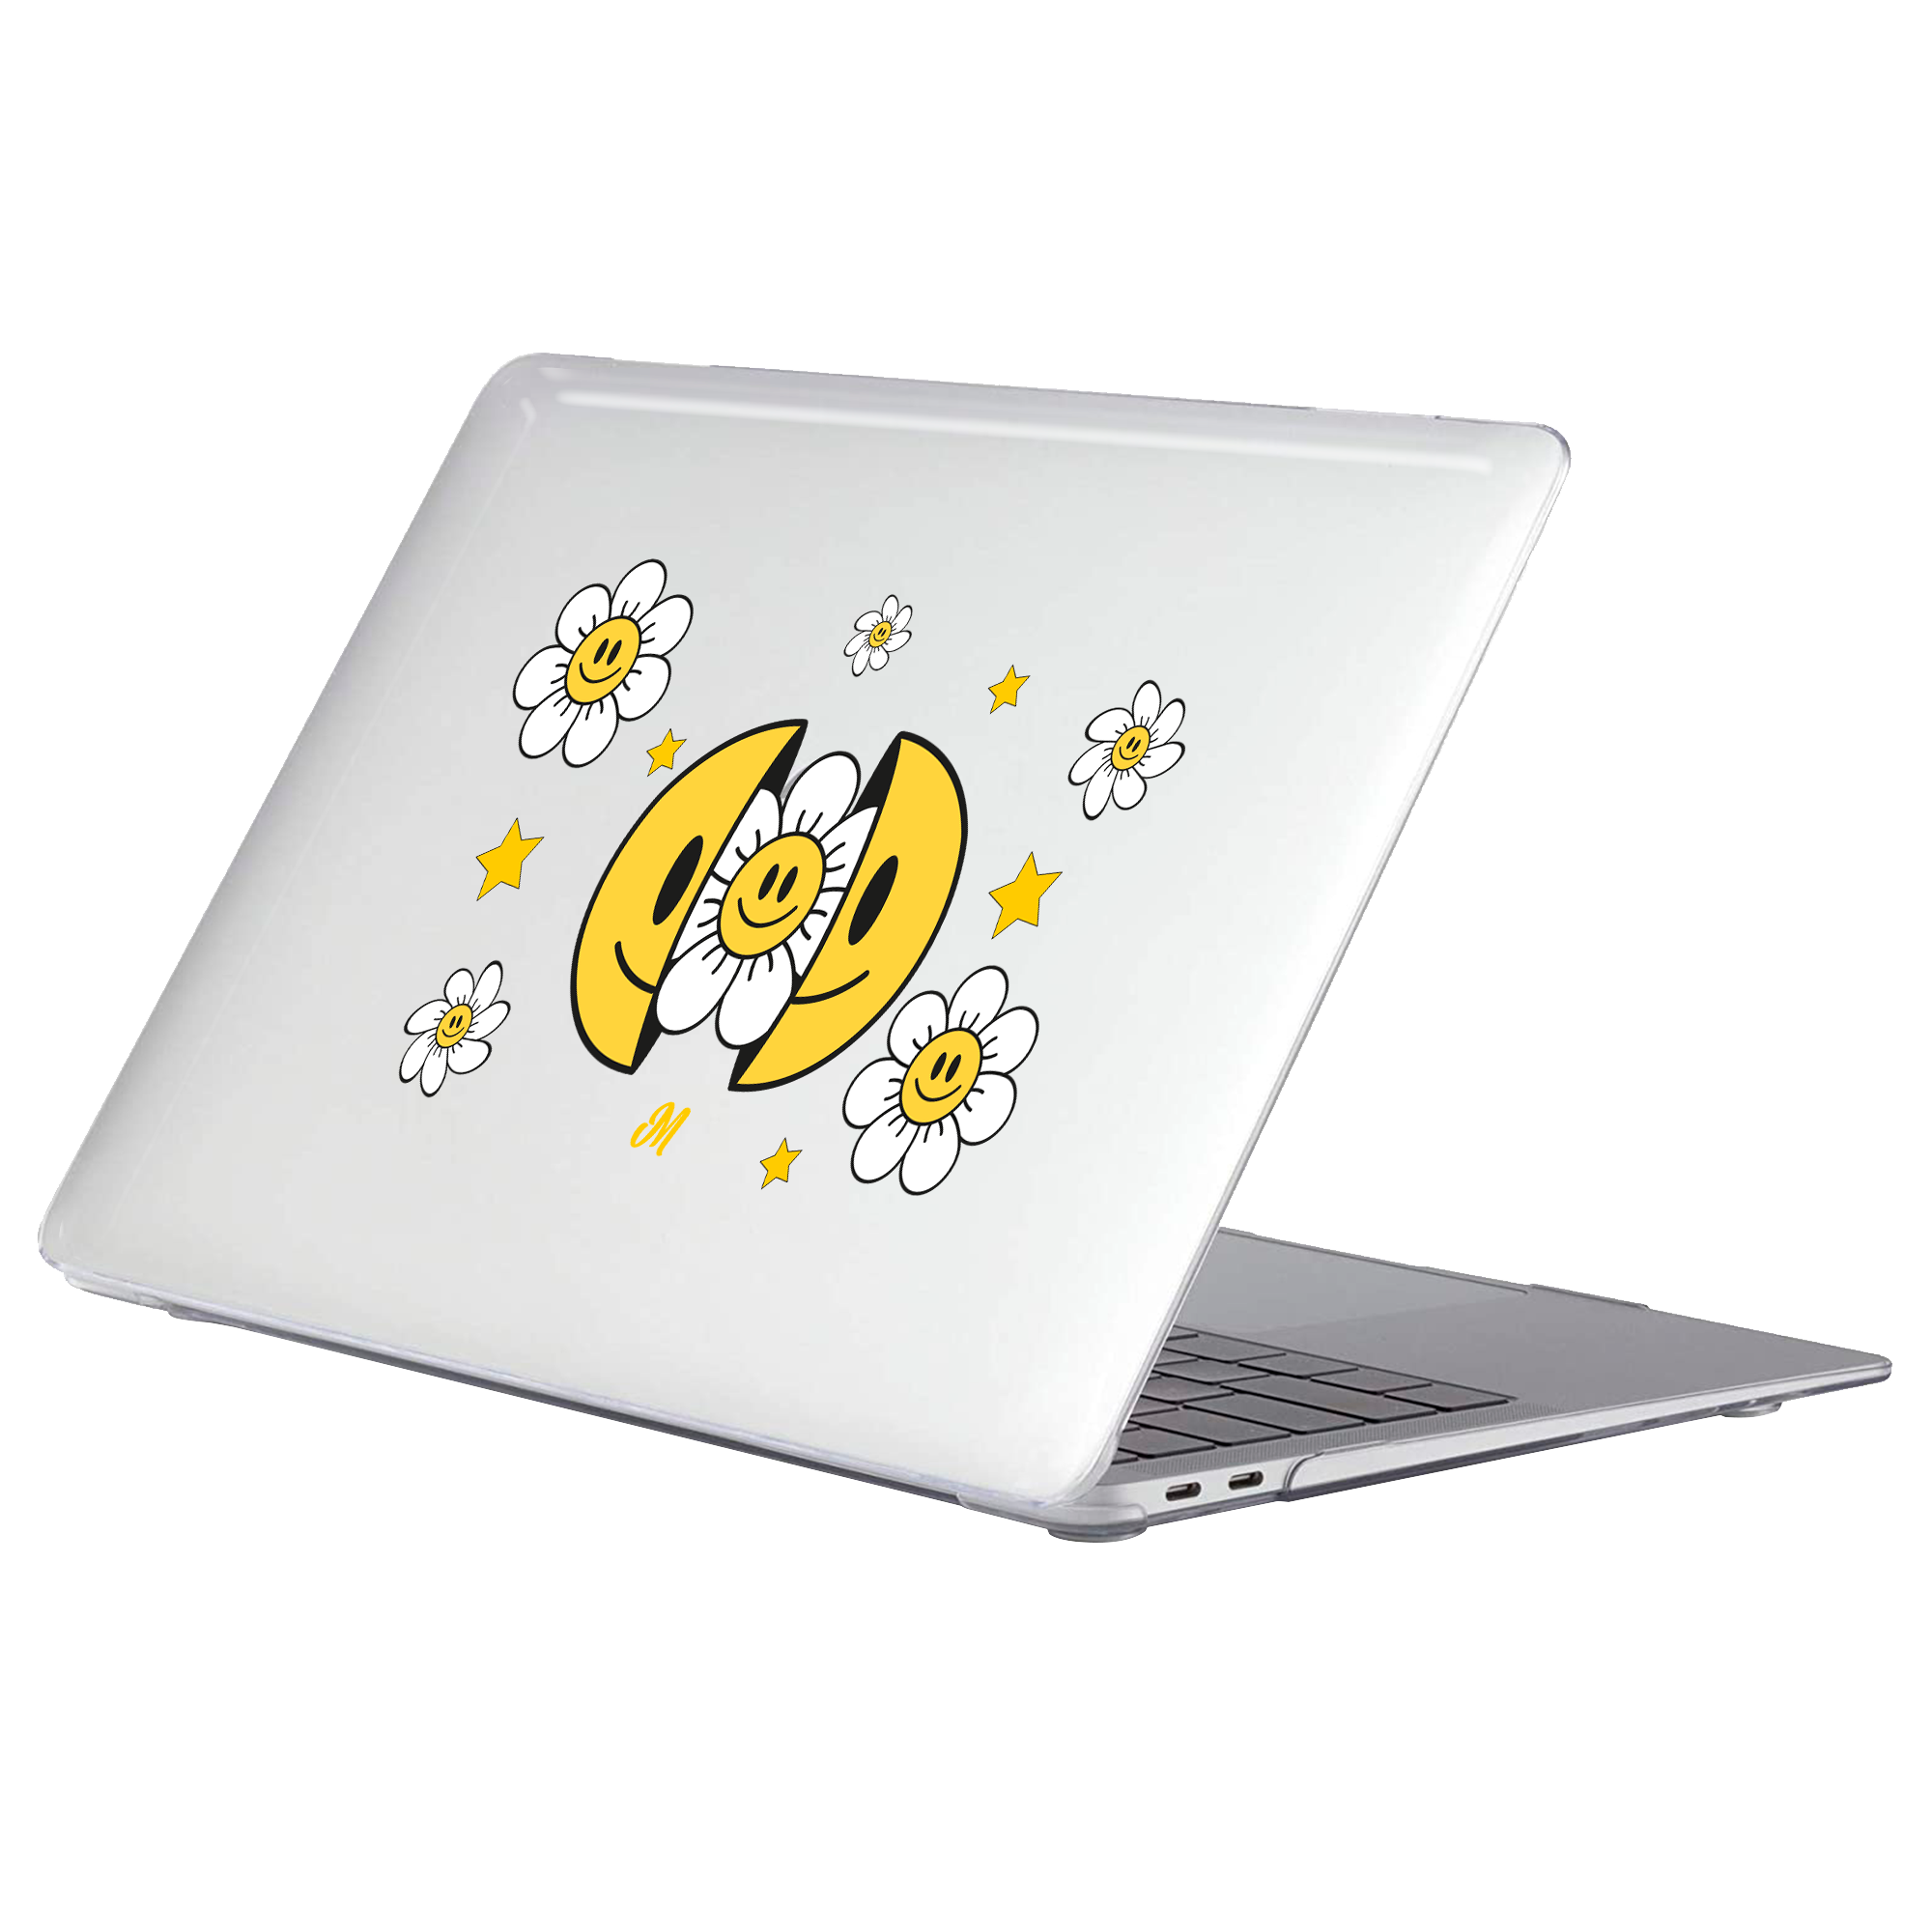 Caras felices aesthetic MacBook Case - Mandala Cases 